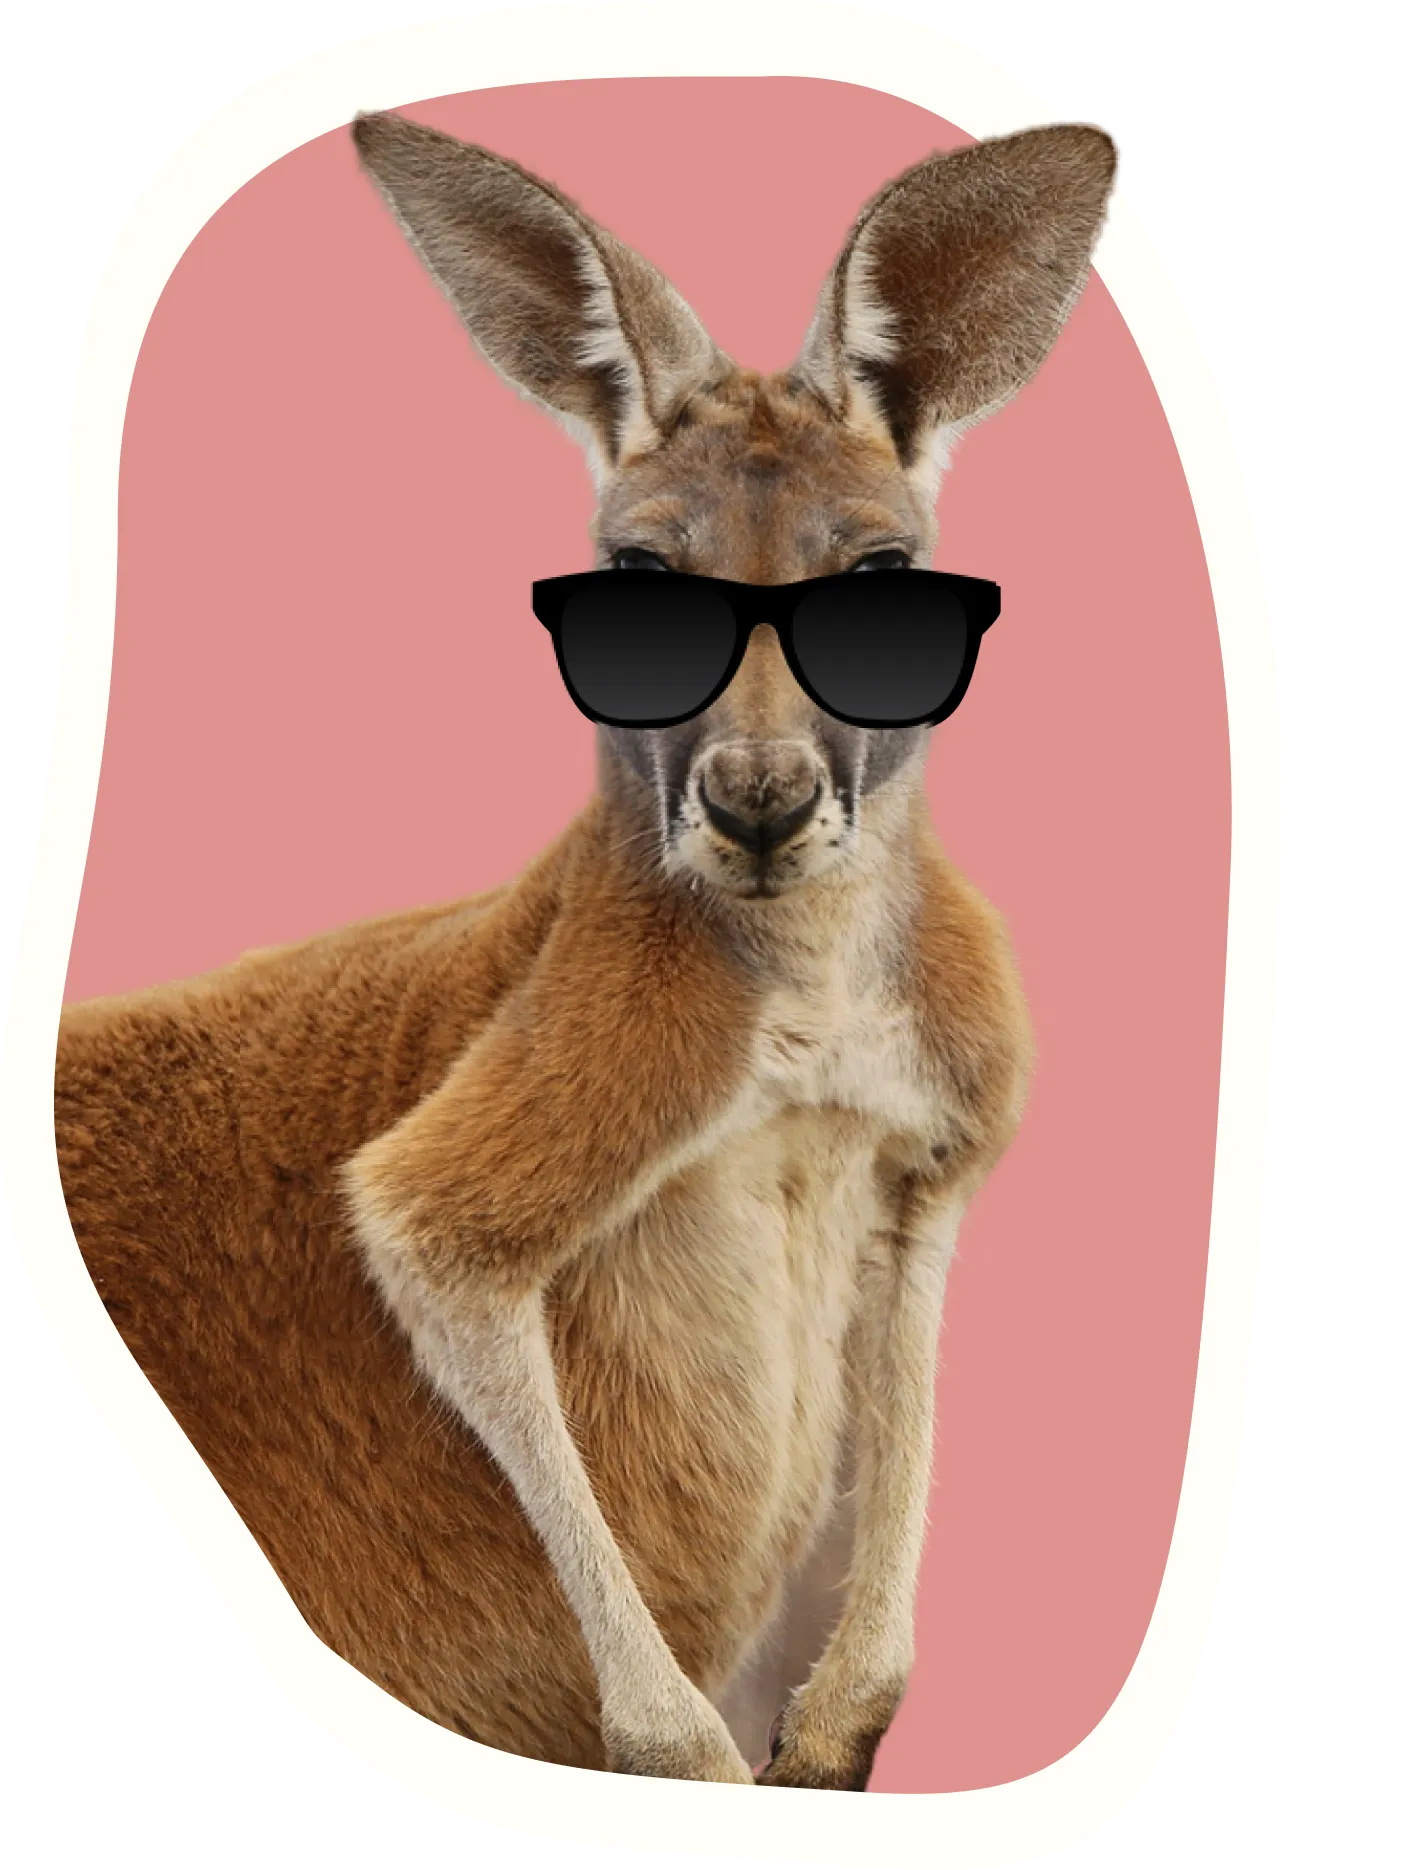 Roo is a kangaroo and a sidekick to Beatrice